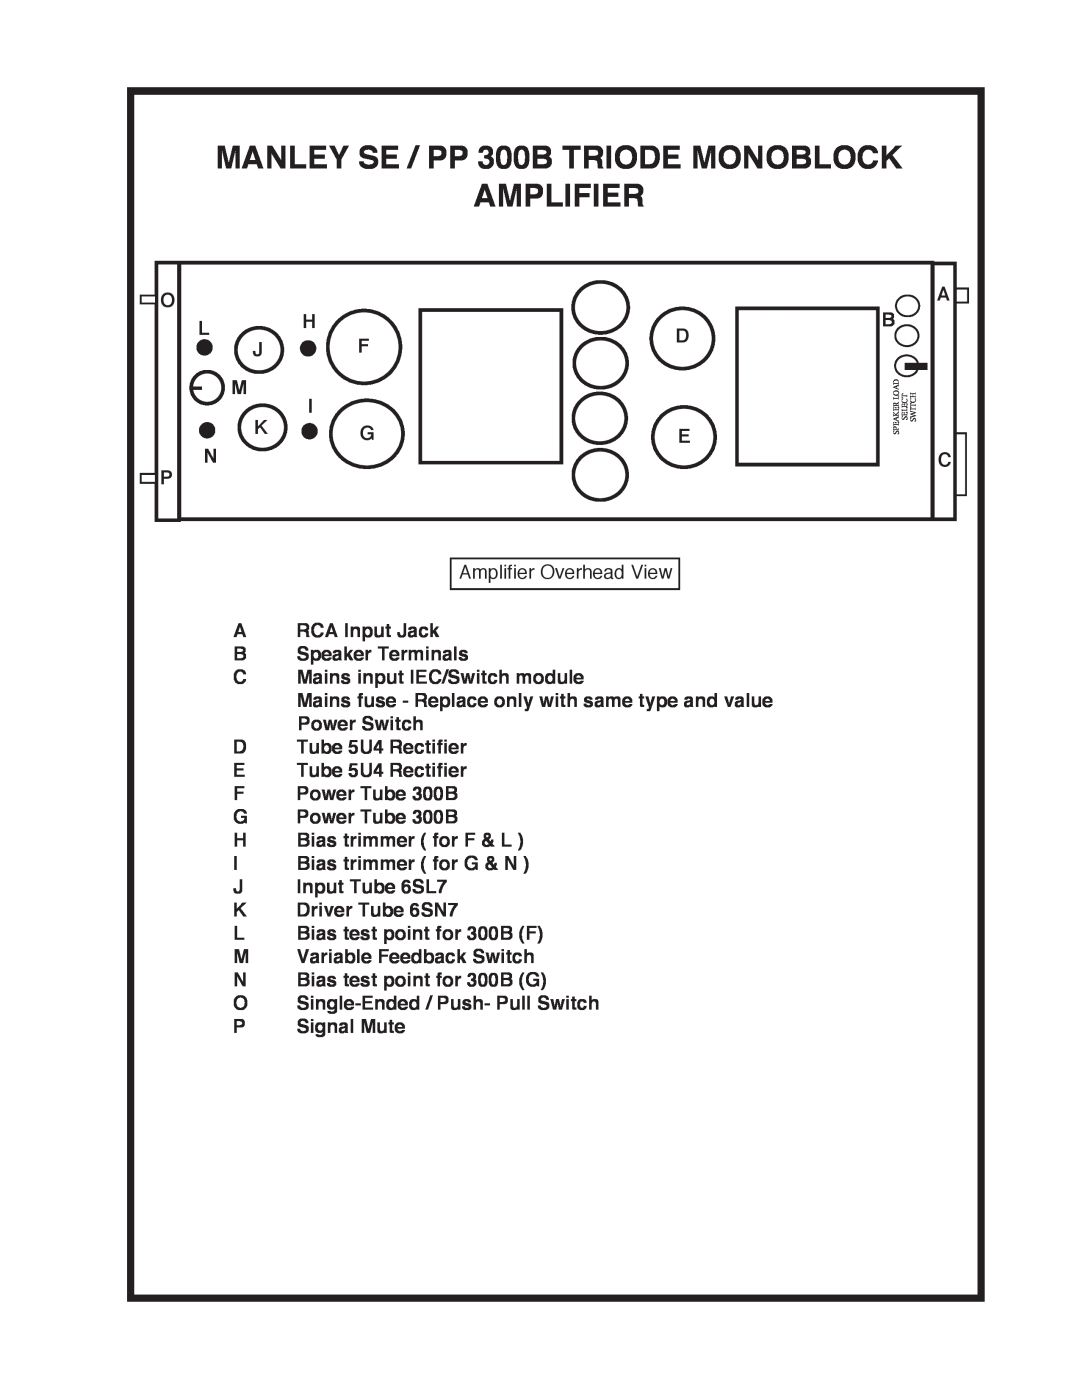 Manley Labs owner manual MANLEY SE / PP 300B TRIODE MONOBLOCK AMPLIFIER 